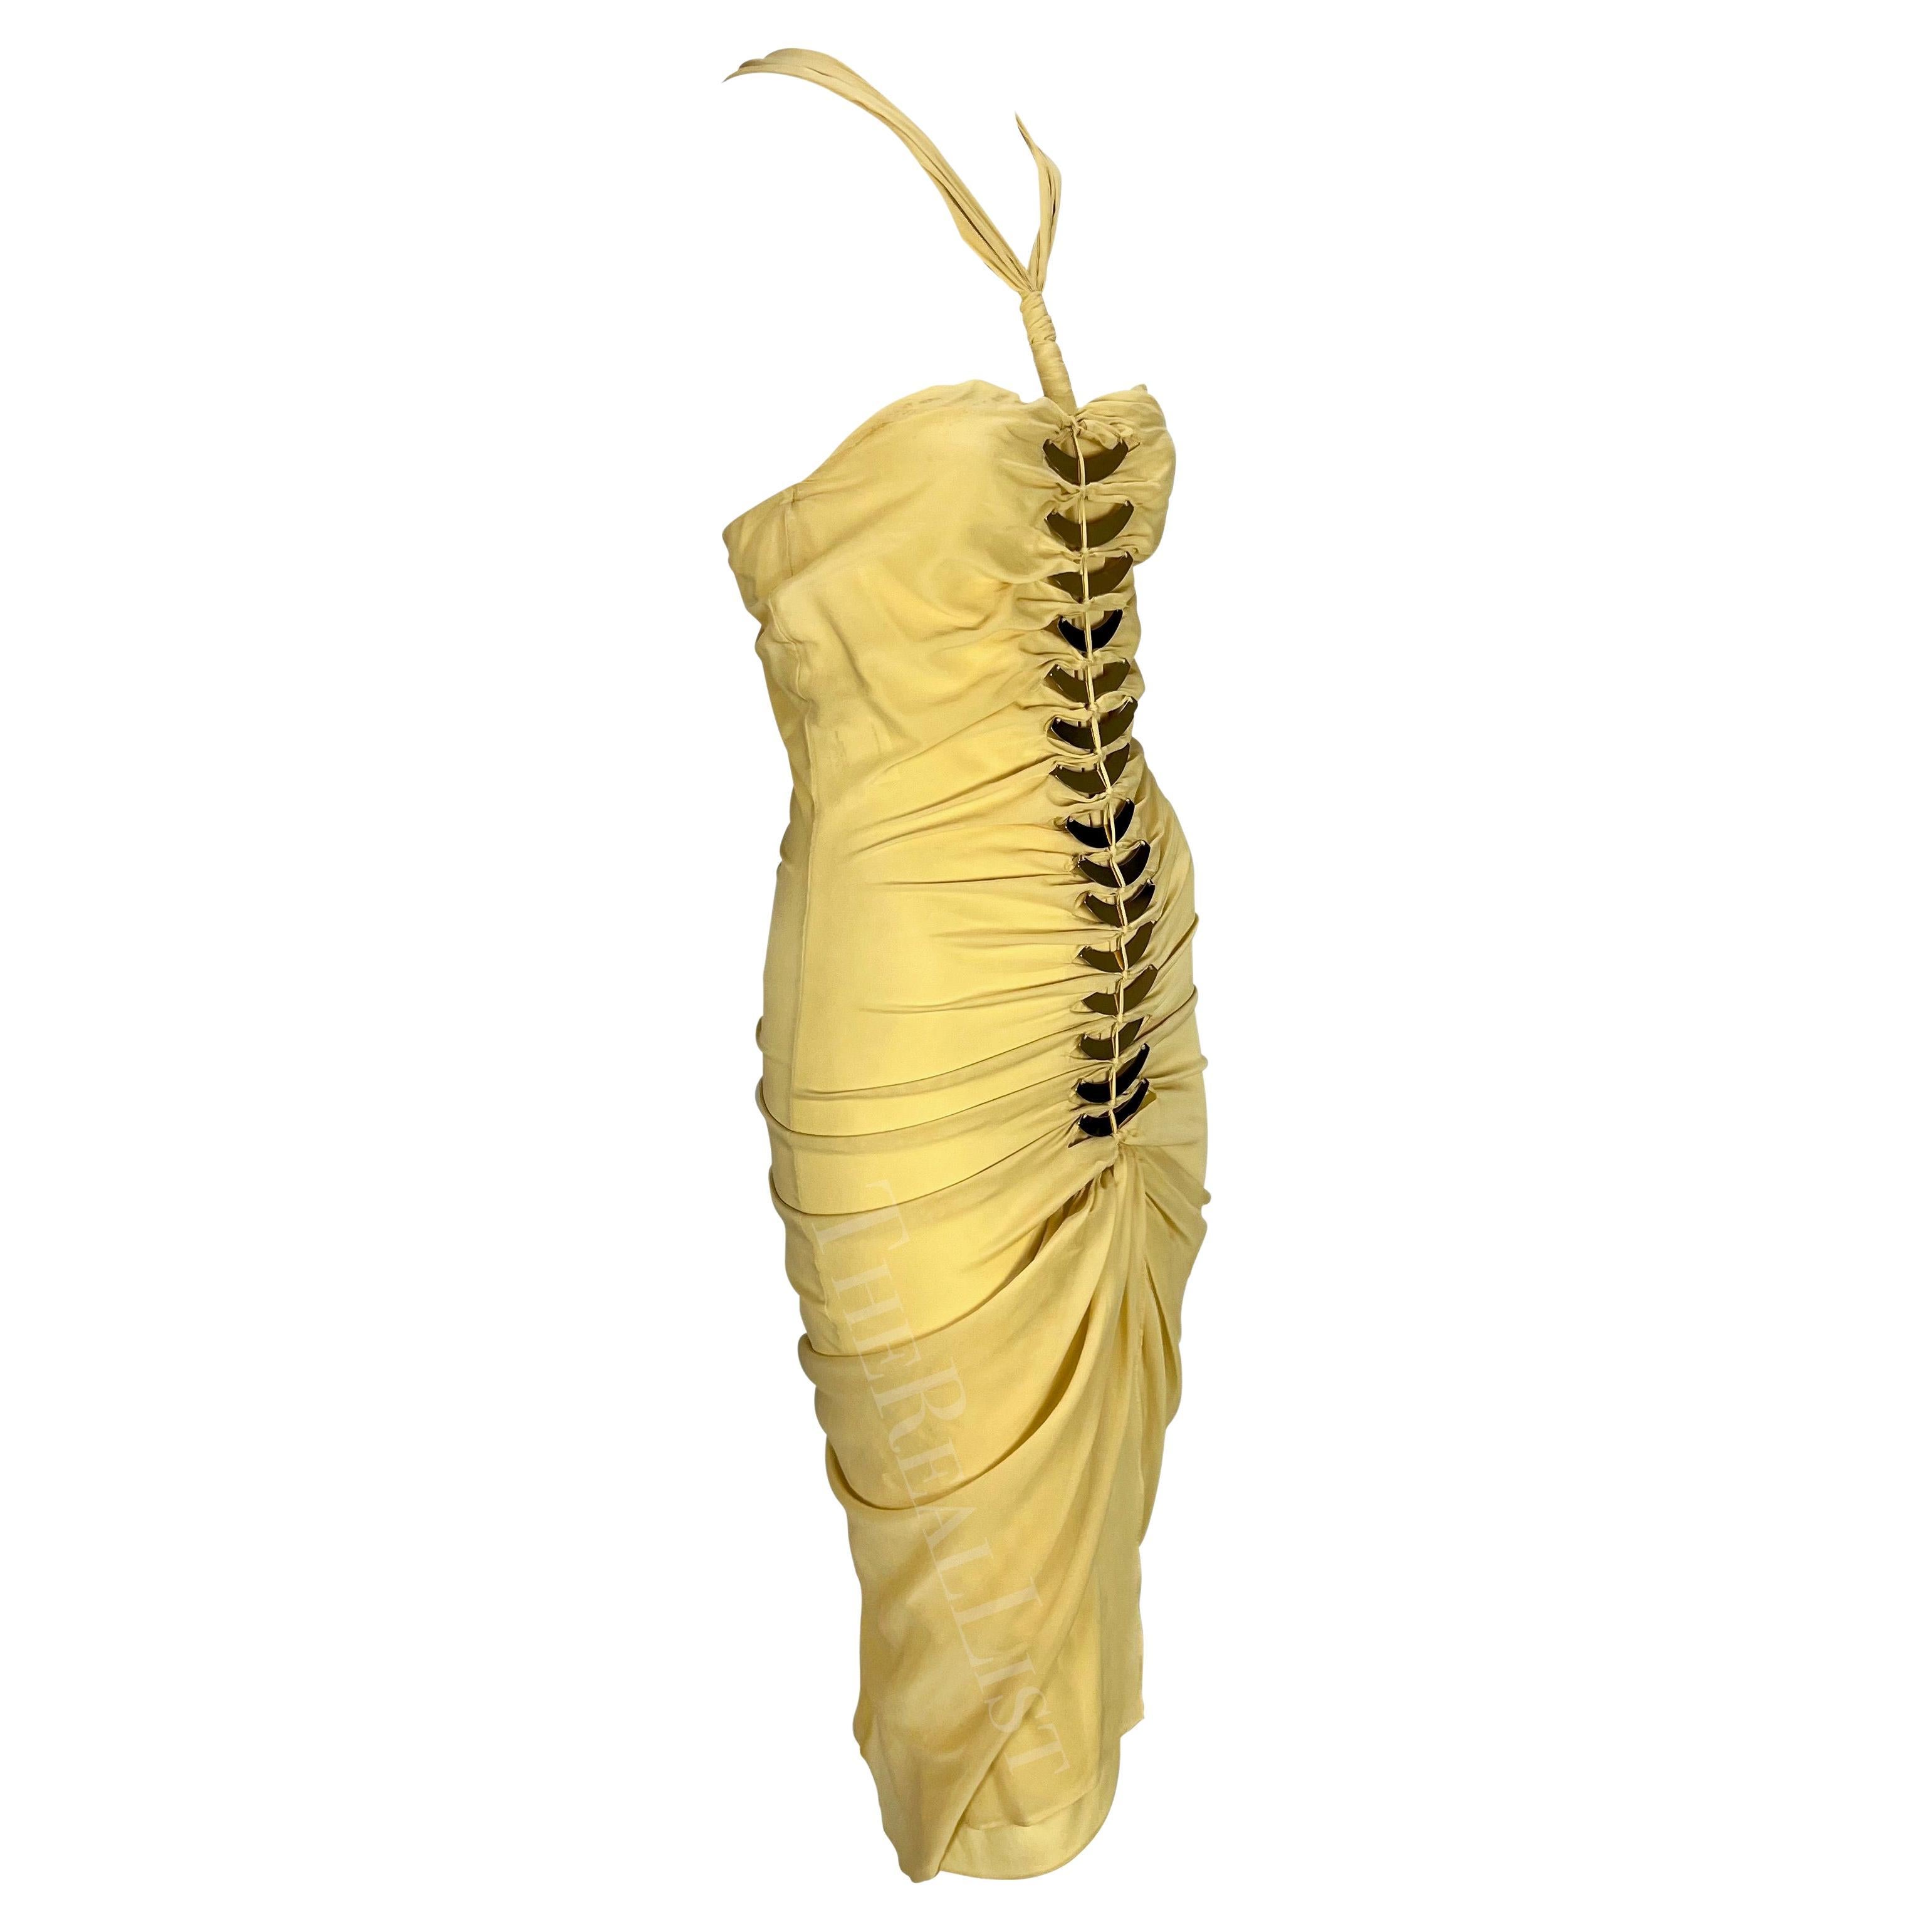 S/S 2005 Gucci Beige Cutout Gold-Tone Metal Spine Bodycon Mini Dress For Sale 6